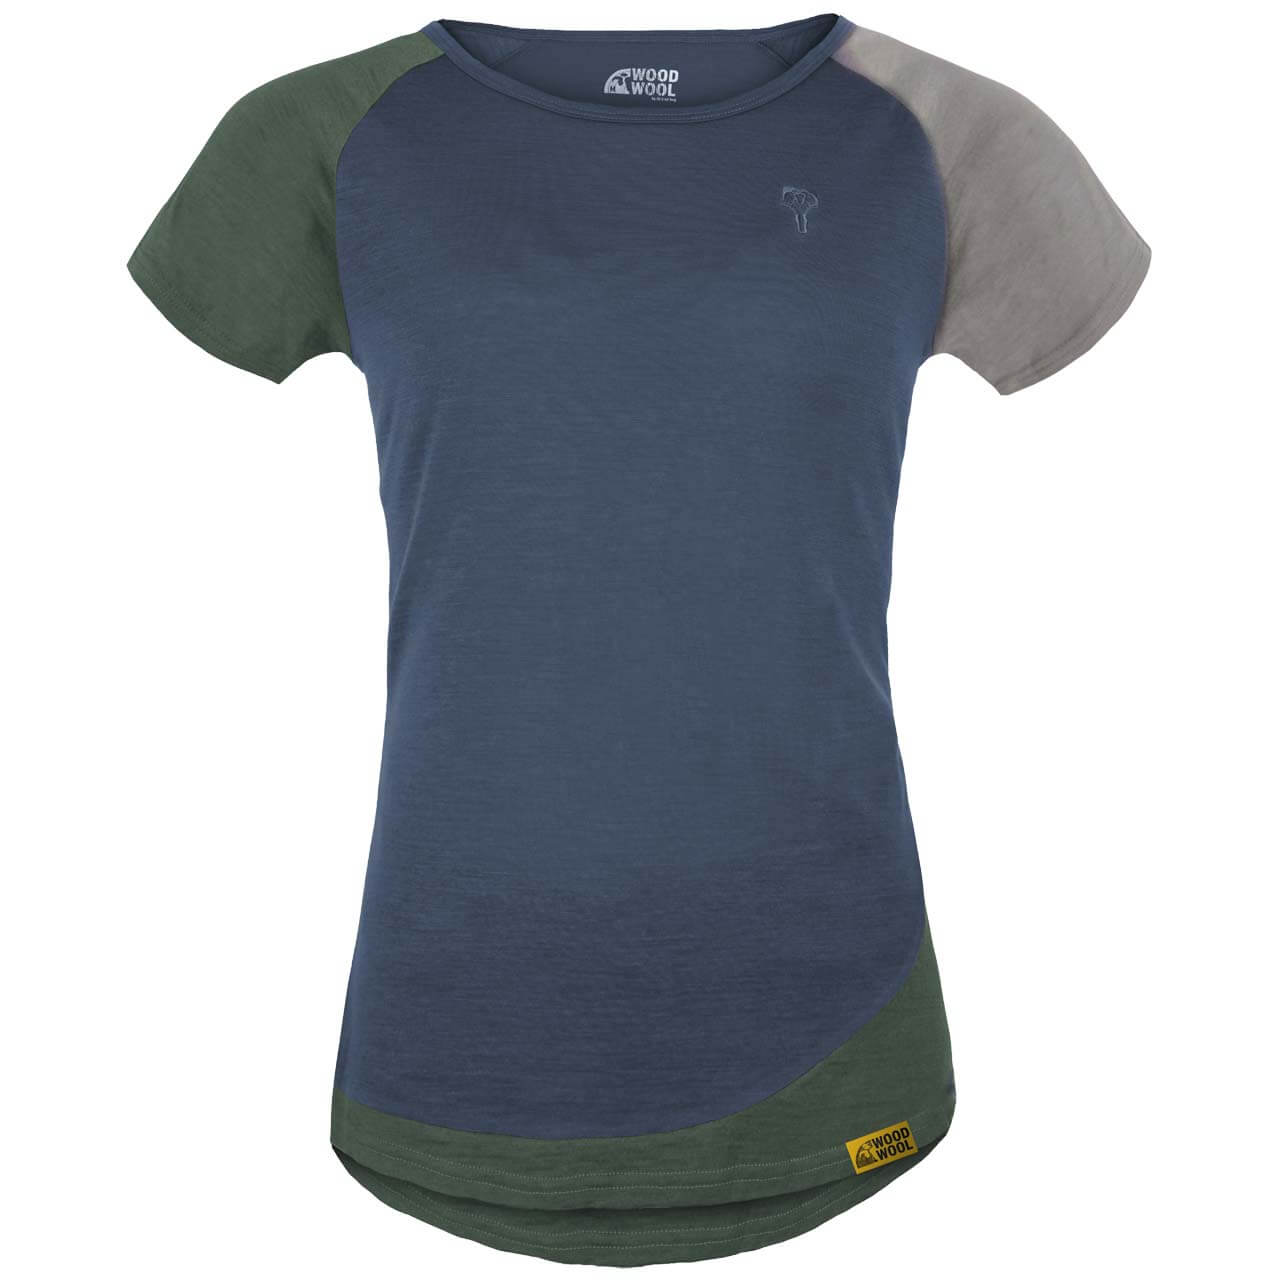 Grüezi Bag WoodWool Janeway T-Shirt - Ocean Cavern, S von Grüezi Bag